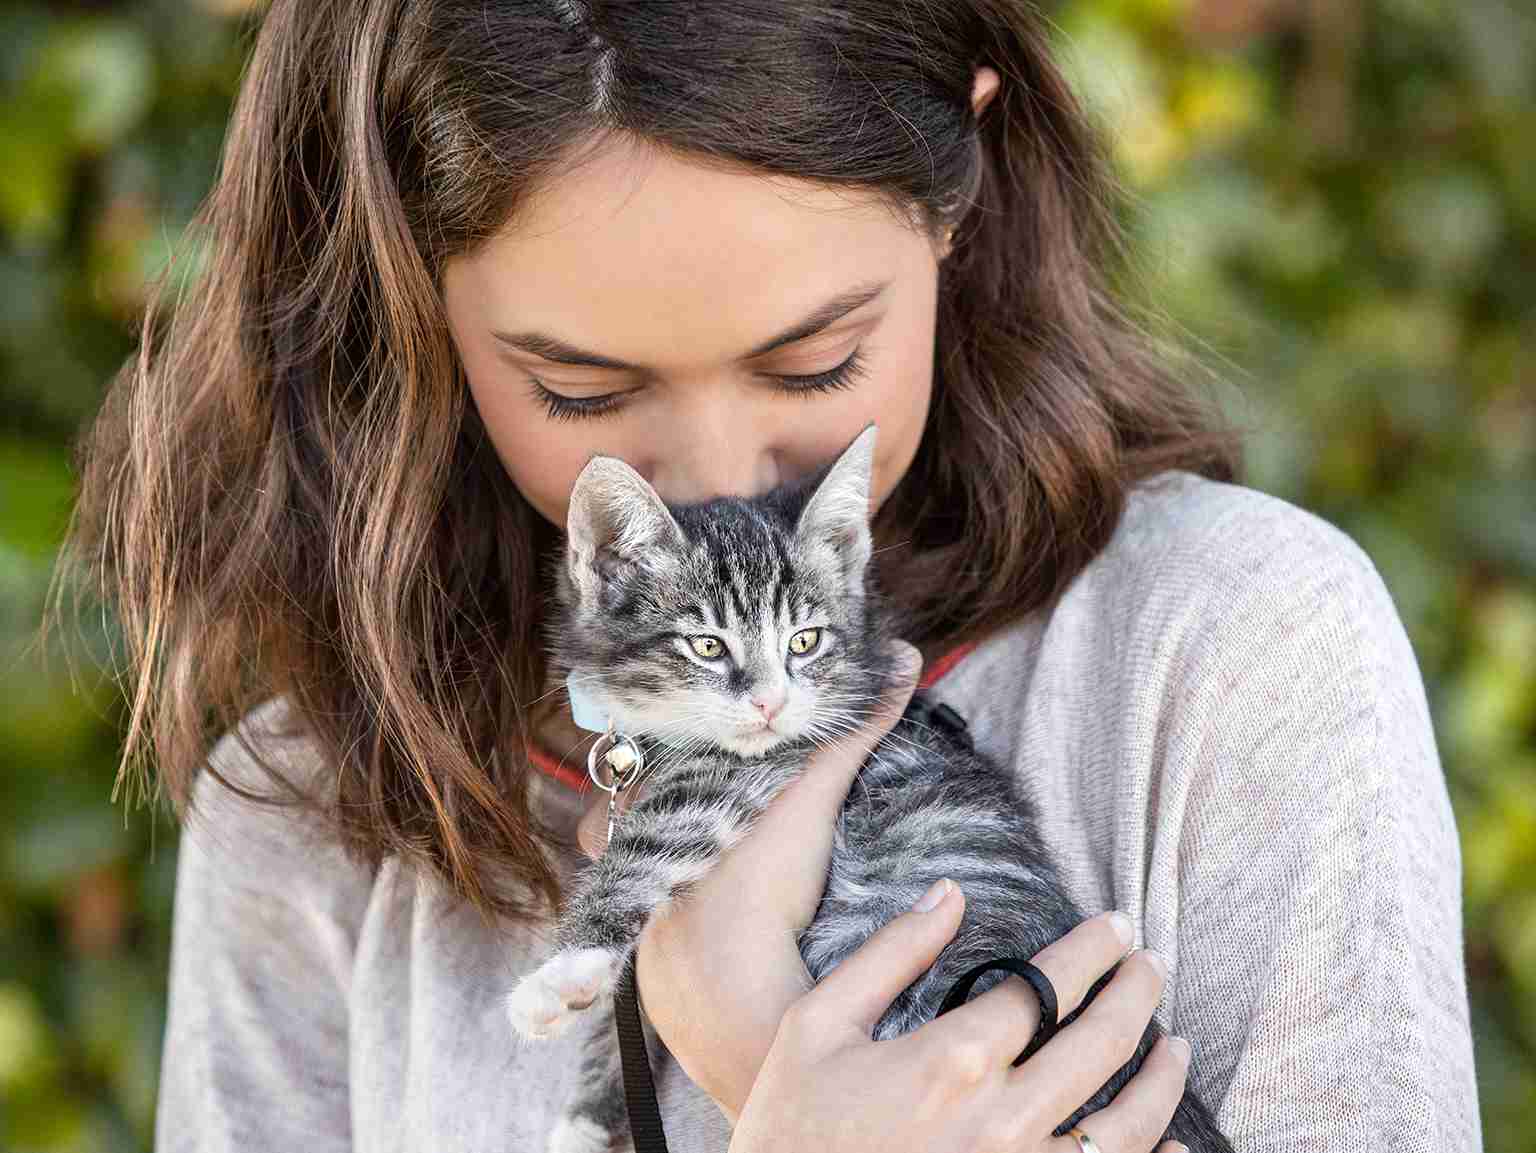 A young girl hugging a kitten